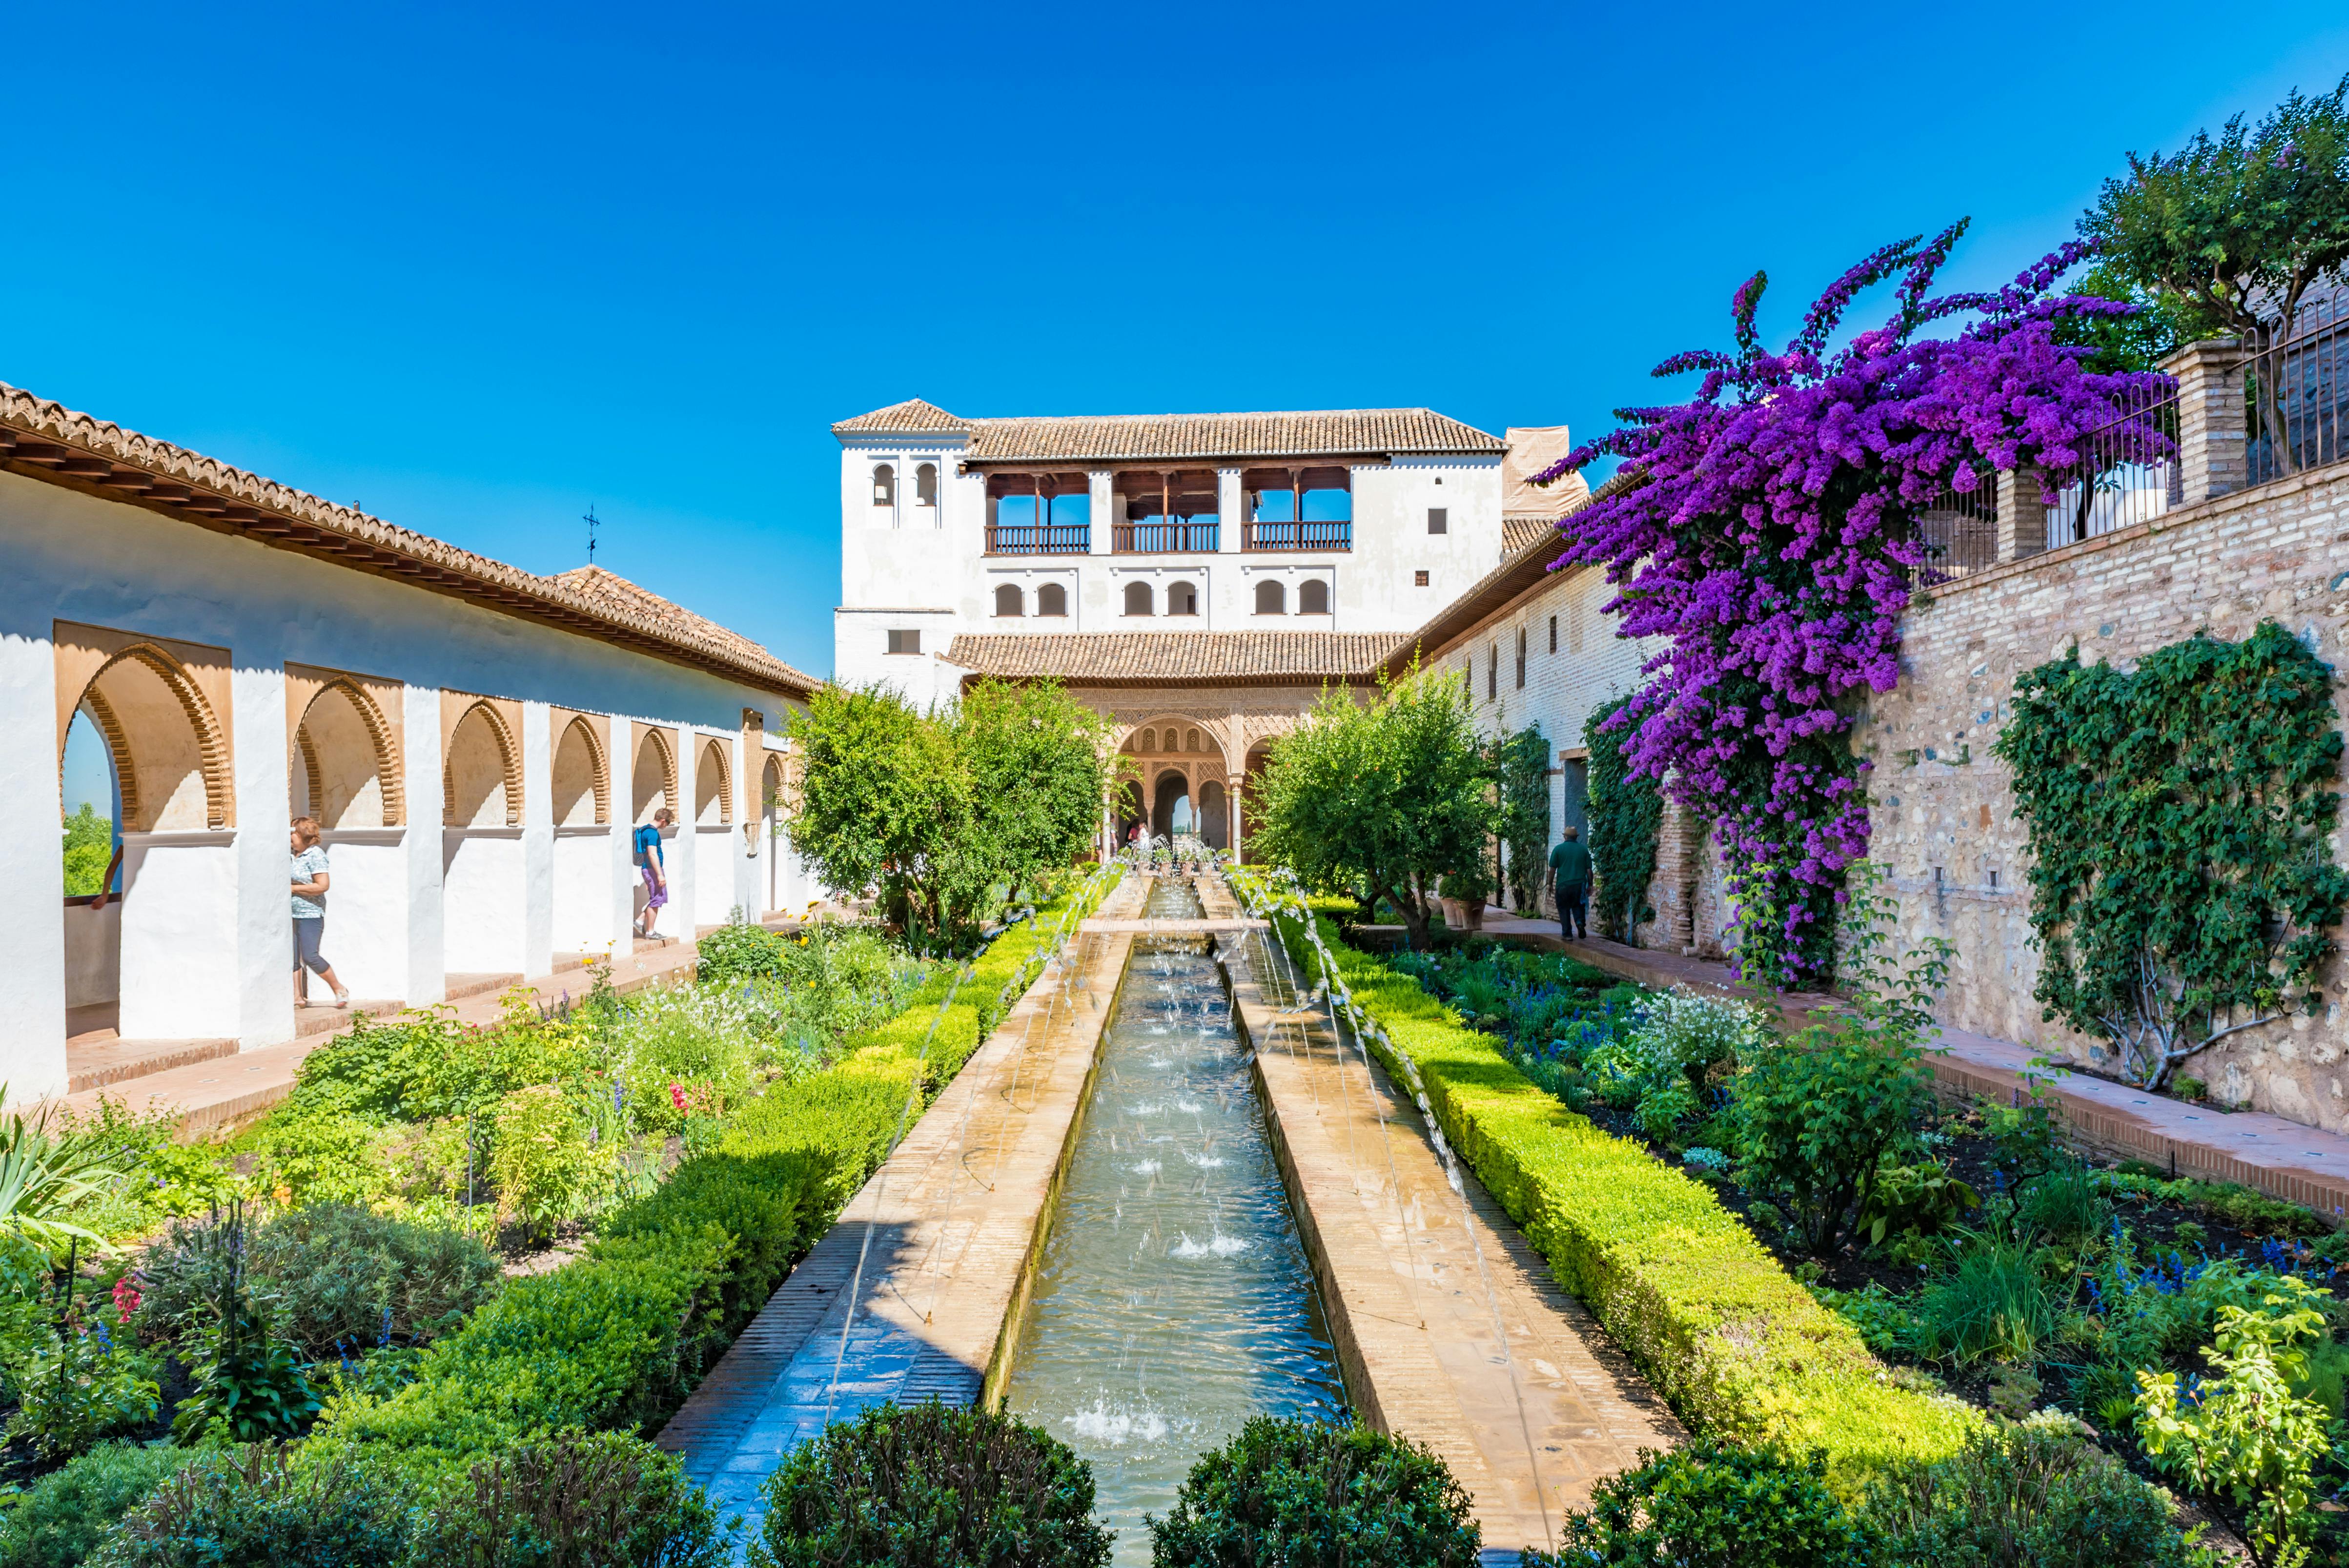 Visite guidée de l'Alhambra et du Generalife